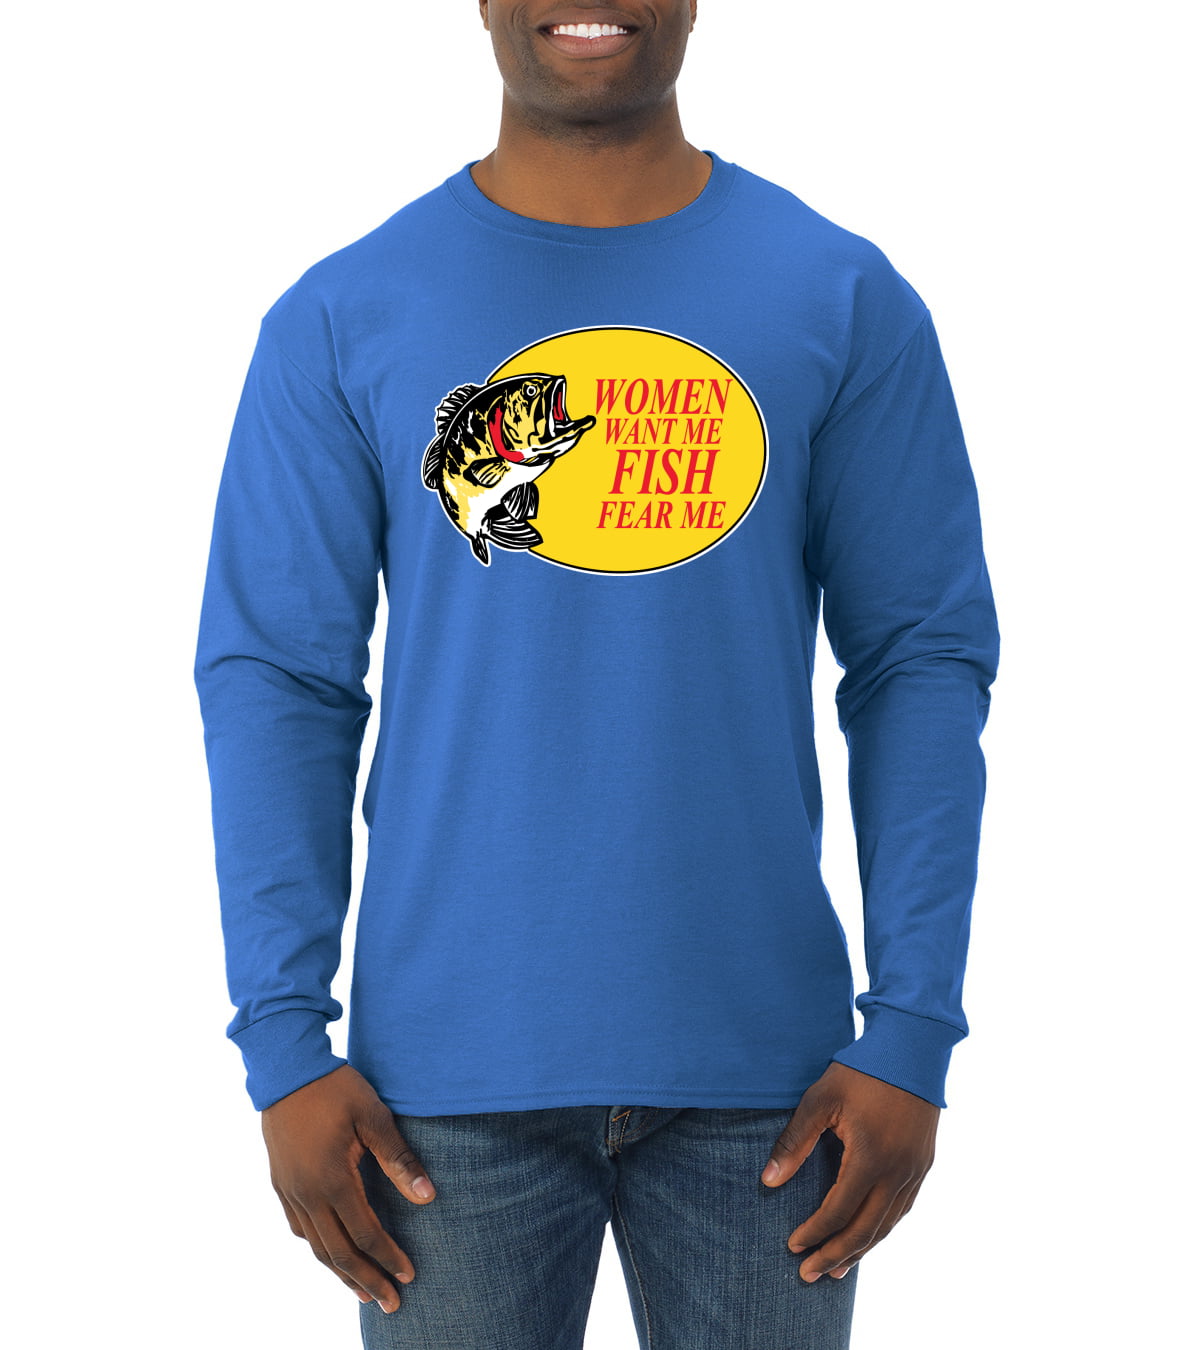 Women Want Me Fish Fear Me Fishing Unisex Crewneck Graphic Sweatshirt,  Kelly, 4XL 